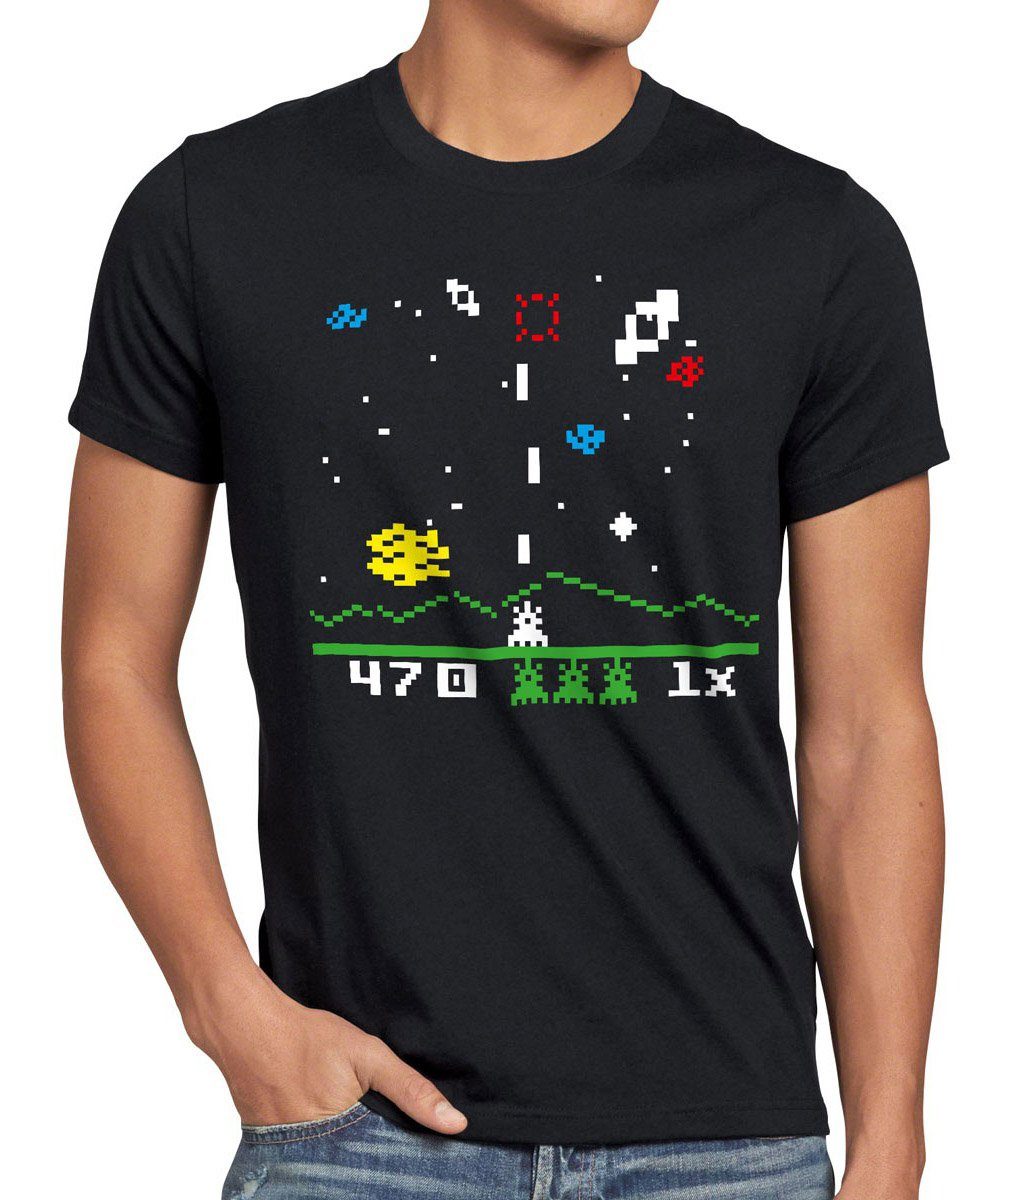 theory sheldon T-Shirt bang Invaders space cooper schwarz astrosmash game style3 Print-Shirt Herren big